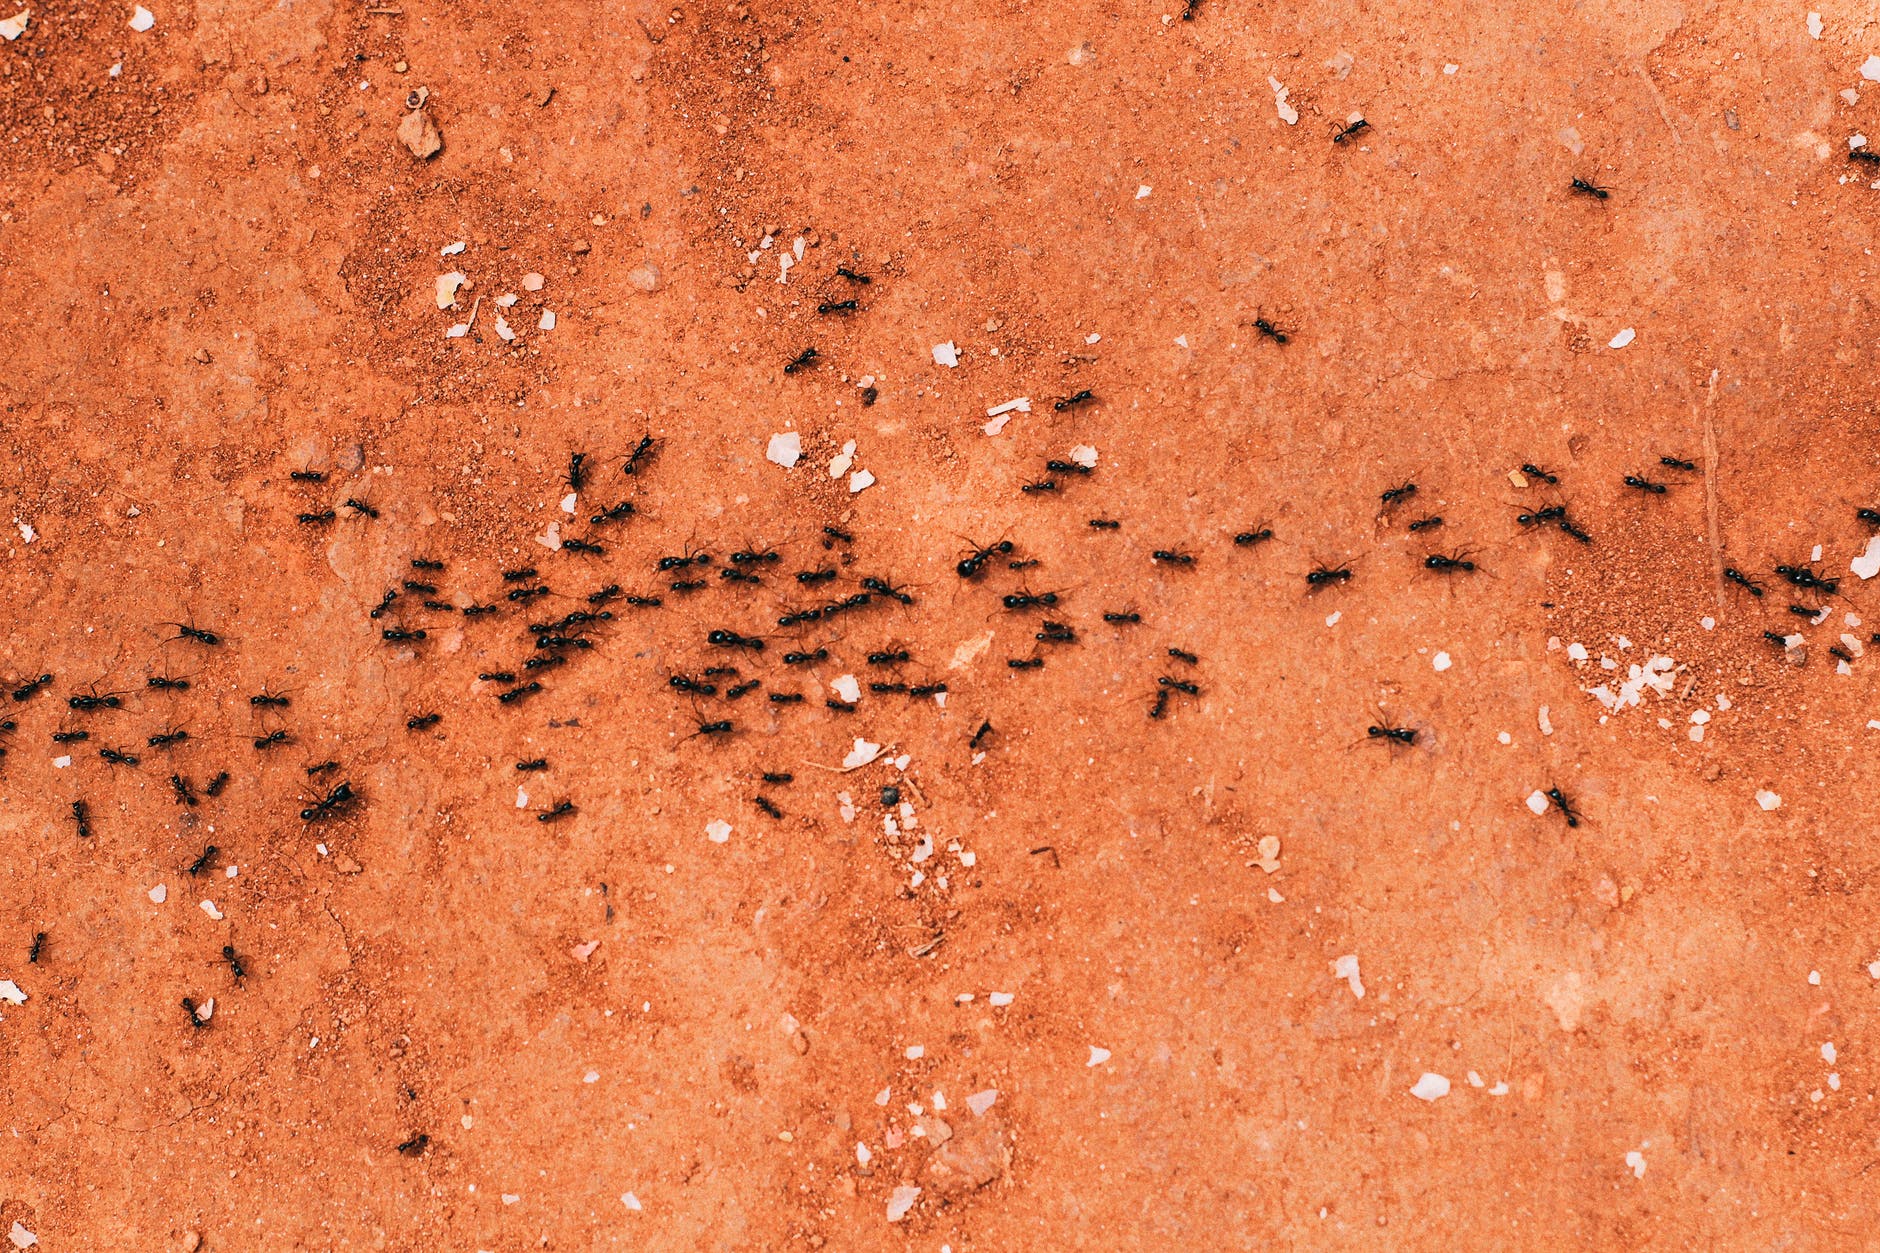 black ants lining up